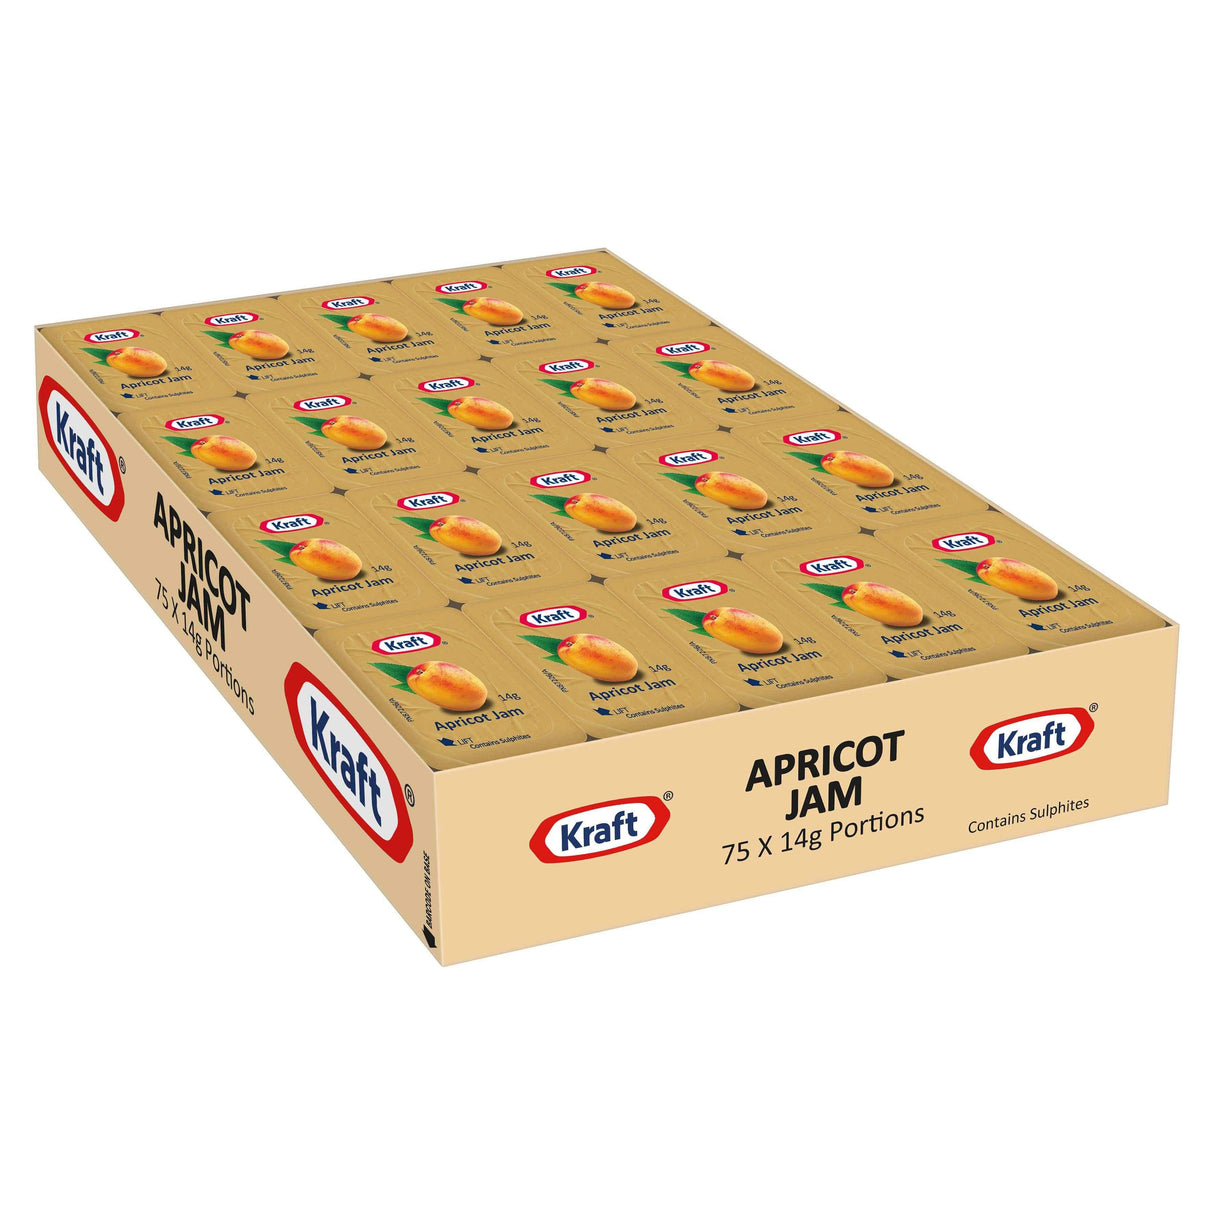 Kraft Apricot Jam Portion 75x14g